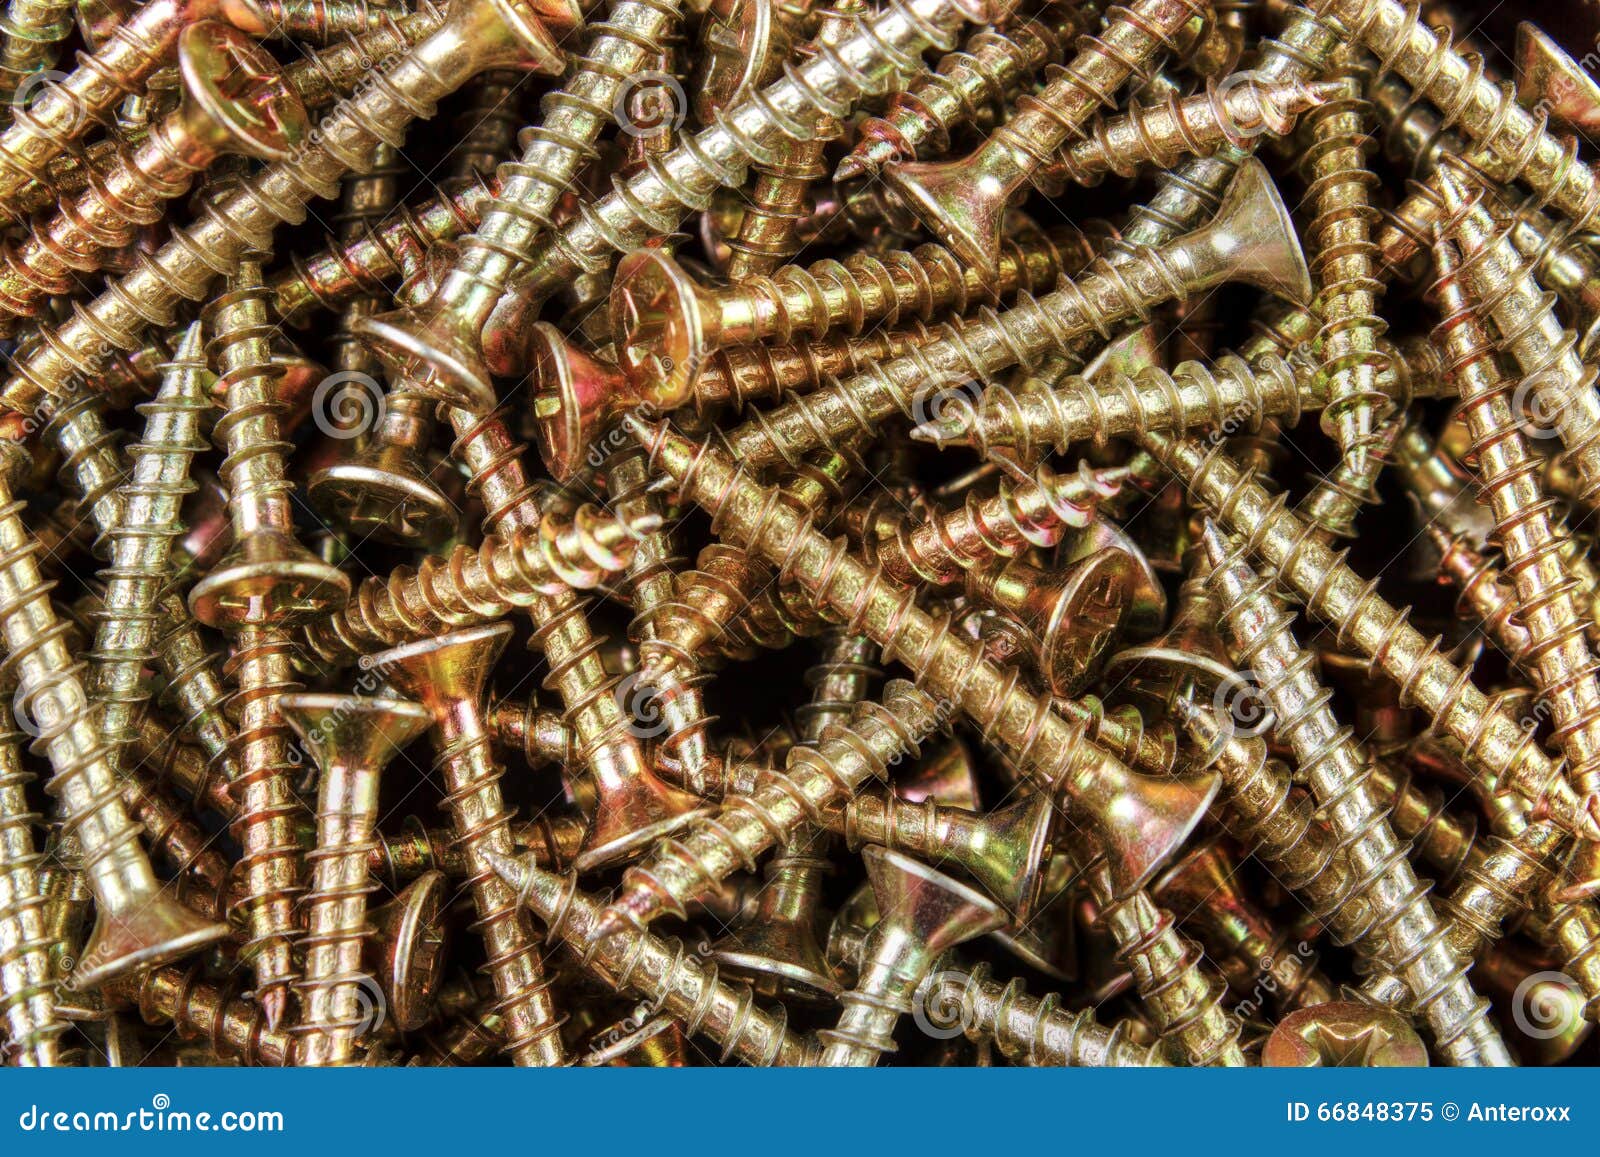 Wood screws stock image. Image of brass, sharp, coated - 66848375